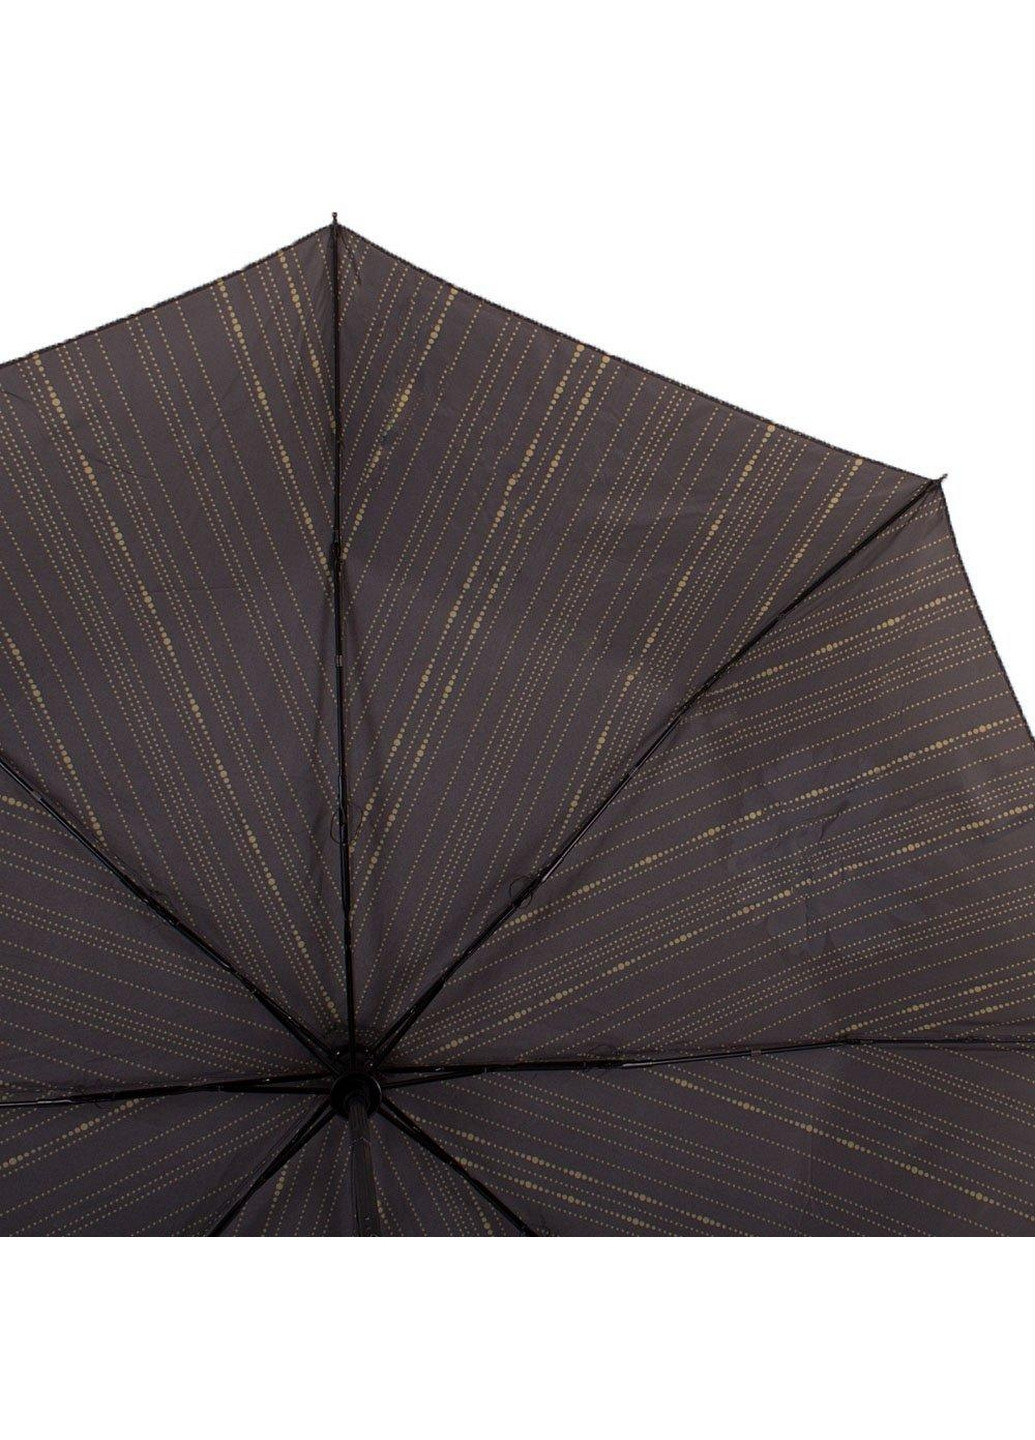 Жіноча складна парасоля напівавтомат 100 см Airton (260330308)